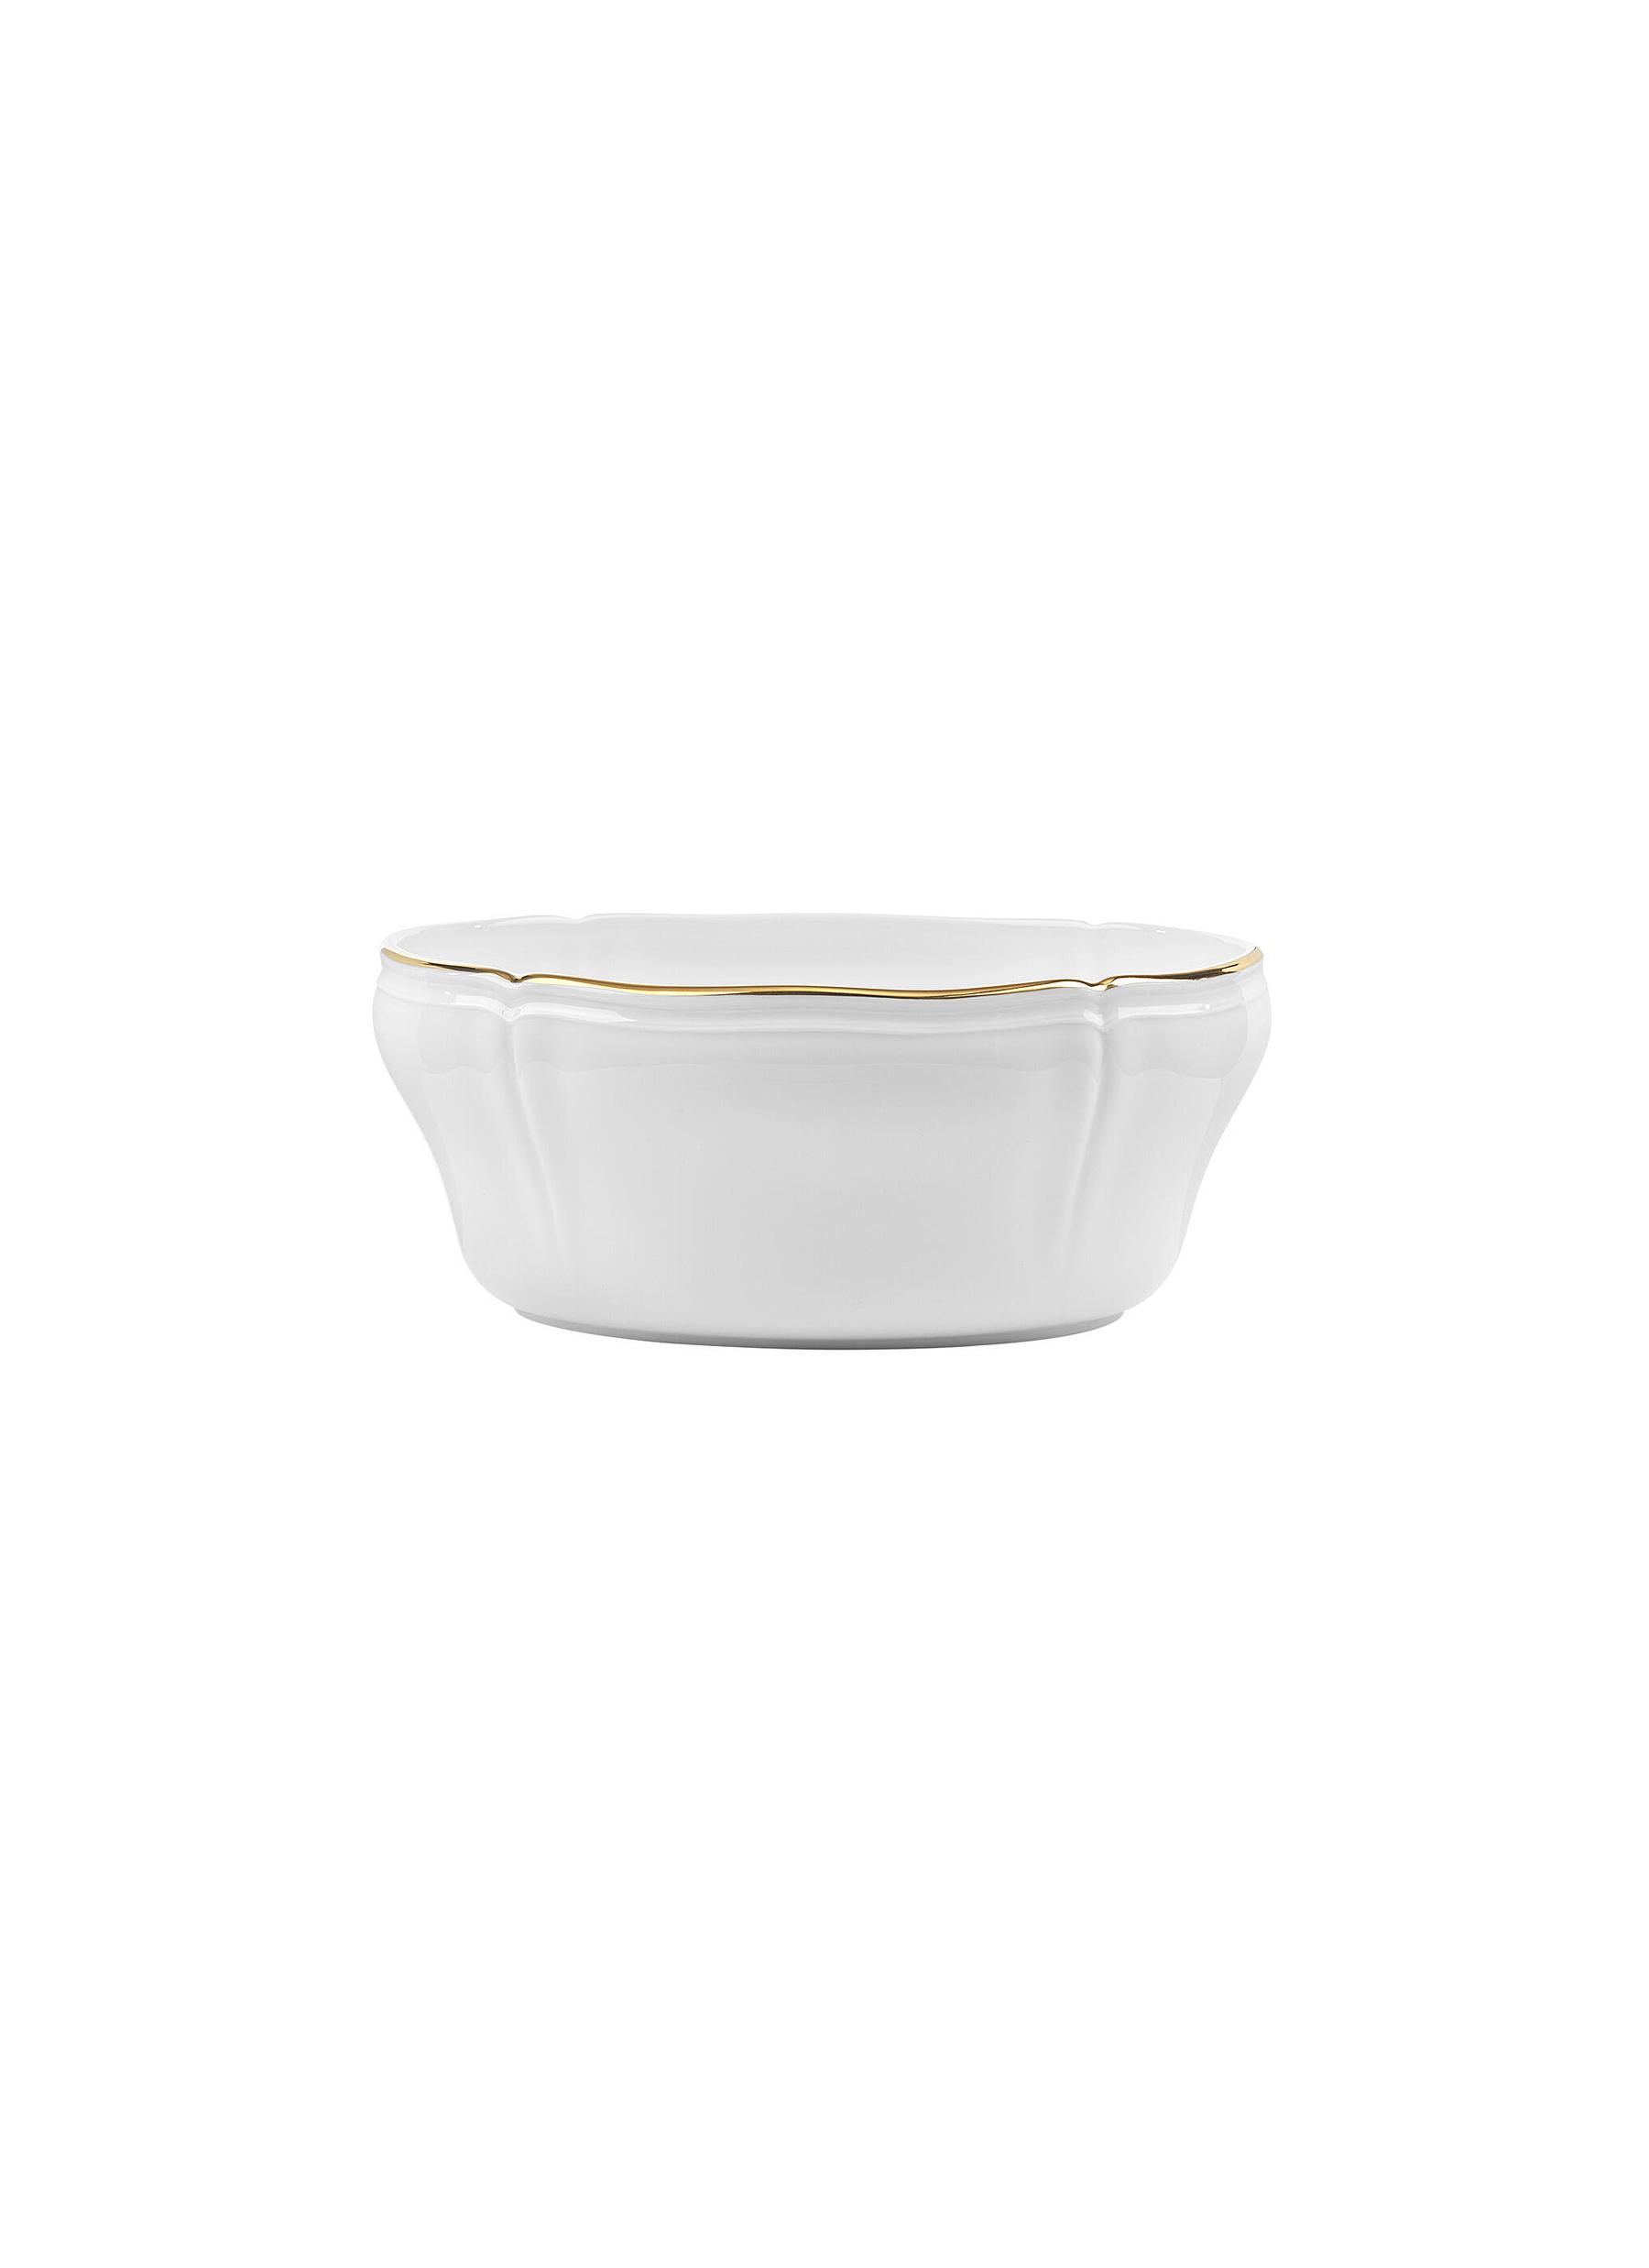 Corona Porcelain Oval Salad Bowl